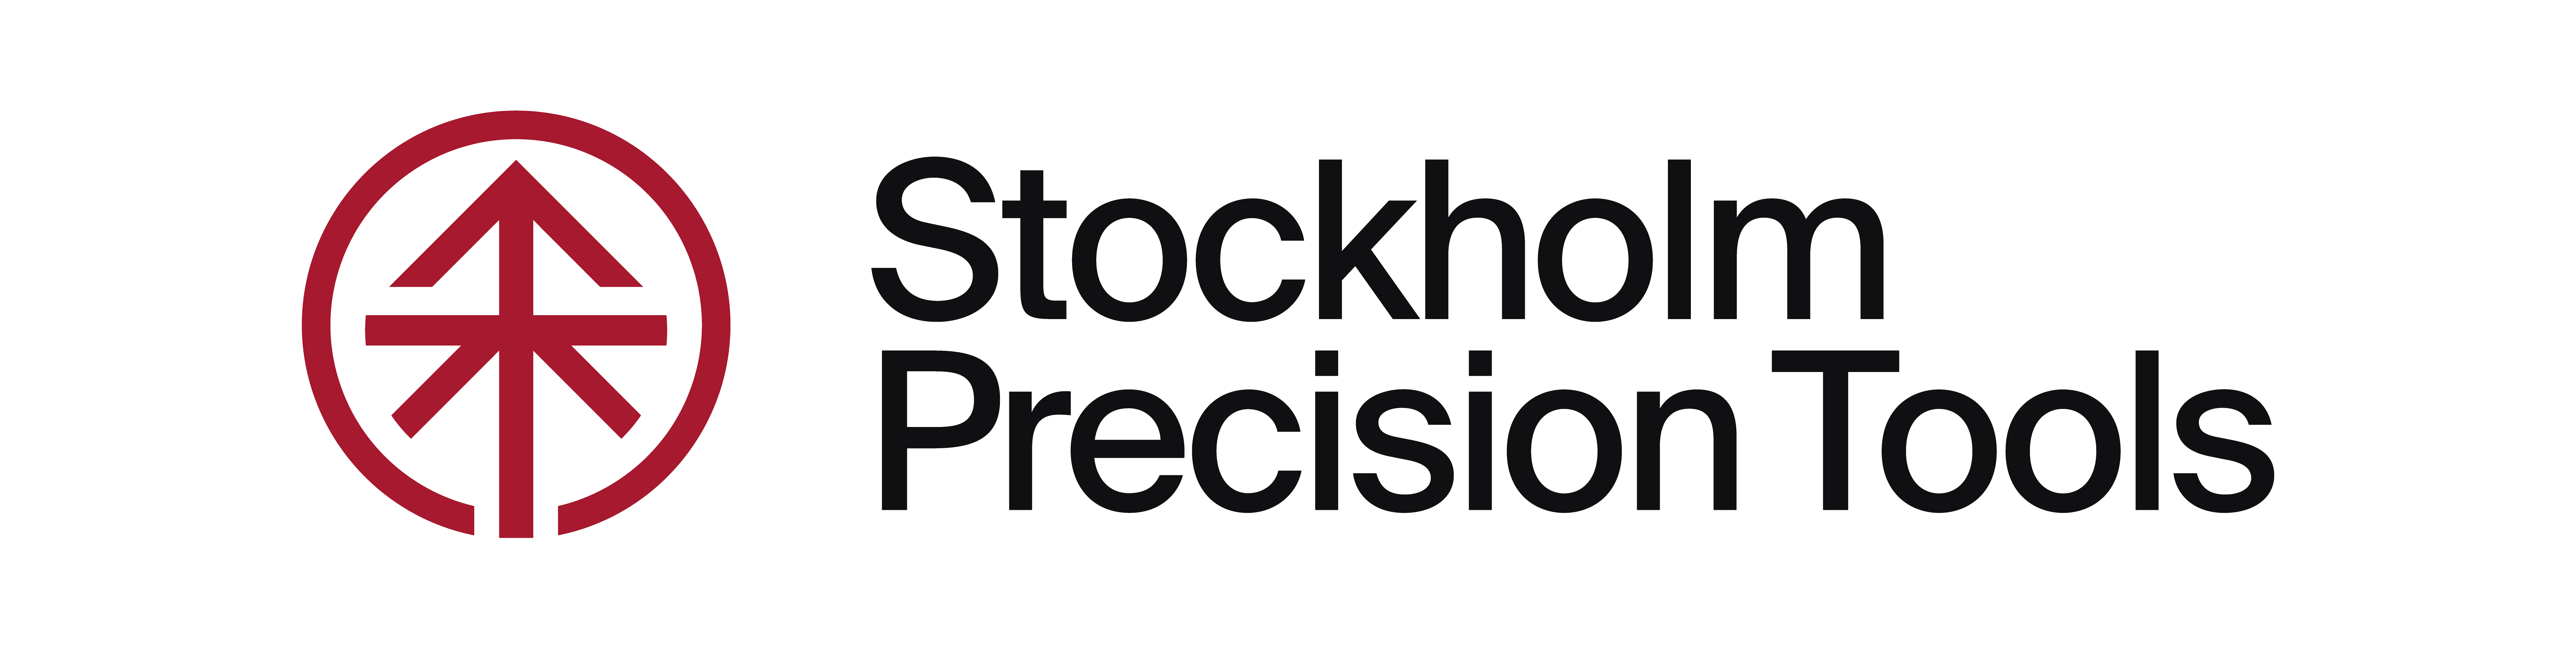 SPT Stockholm Precision Tools